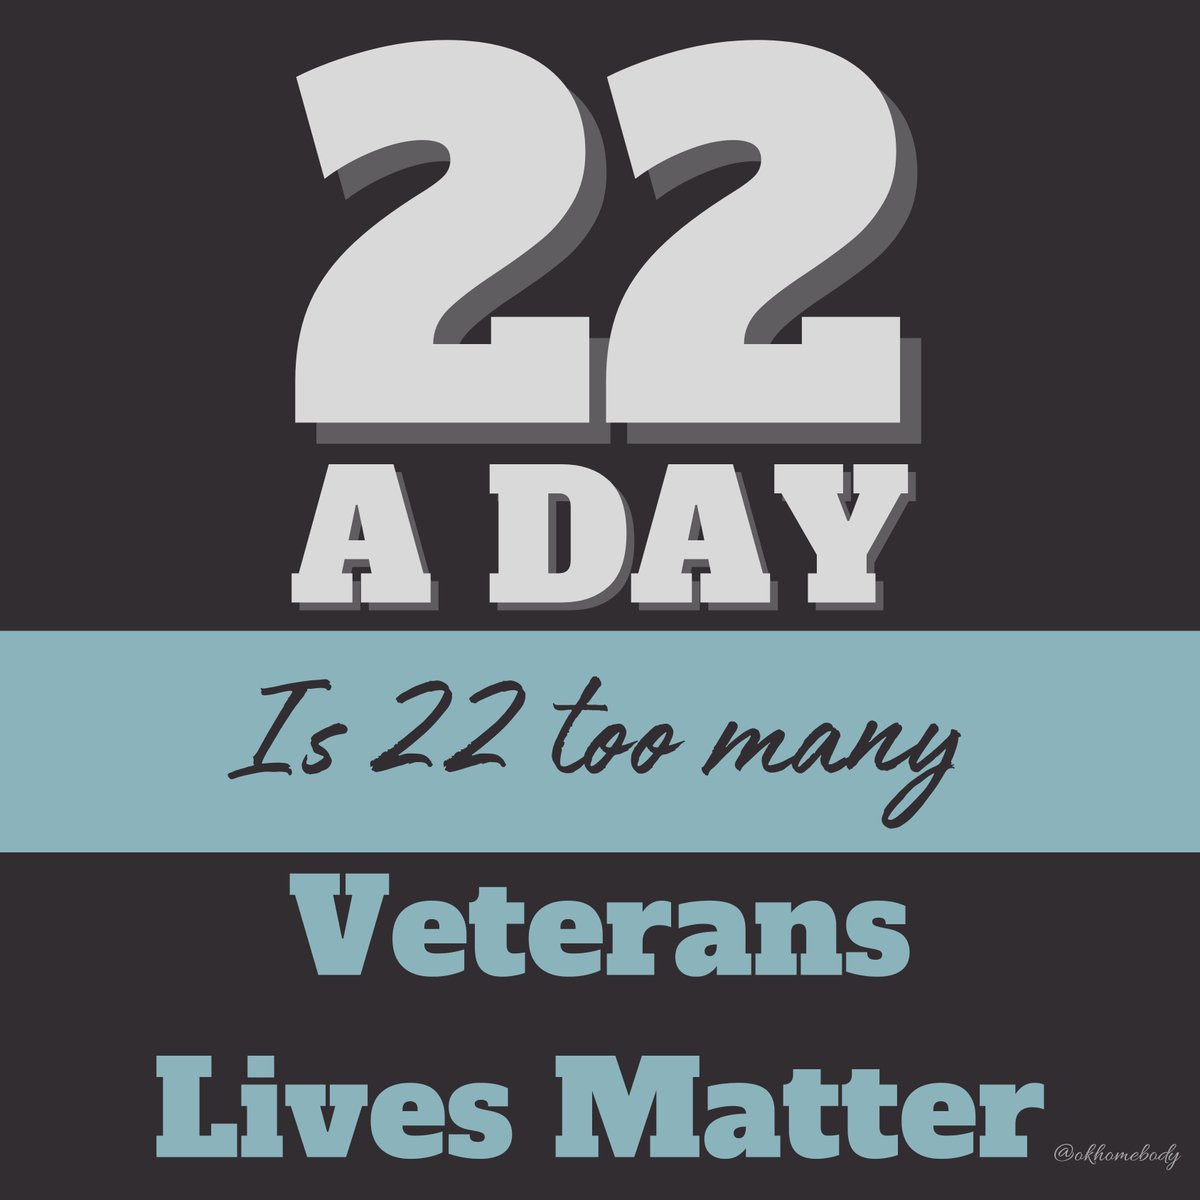 🇺🇸 #ThankfulThursday #Buddy✅with #Veterans 🙏RH
❤️#BuddyChecksMatter because #VeteransLivesMatter❤️
⭐️ 🇺🇸 Repost #EndVeteranSuicide #988press1 🇺🇸⭐️
🇺🇸@Bpup501🙏@Viatorc @jawjaboy71 @Echo_5_Delta👈
🇺🇸 @bayou_barry🙏 @Jennife81374324 @Sarge17157120👈
🇺🇸 @Geeky_Redneck…